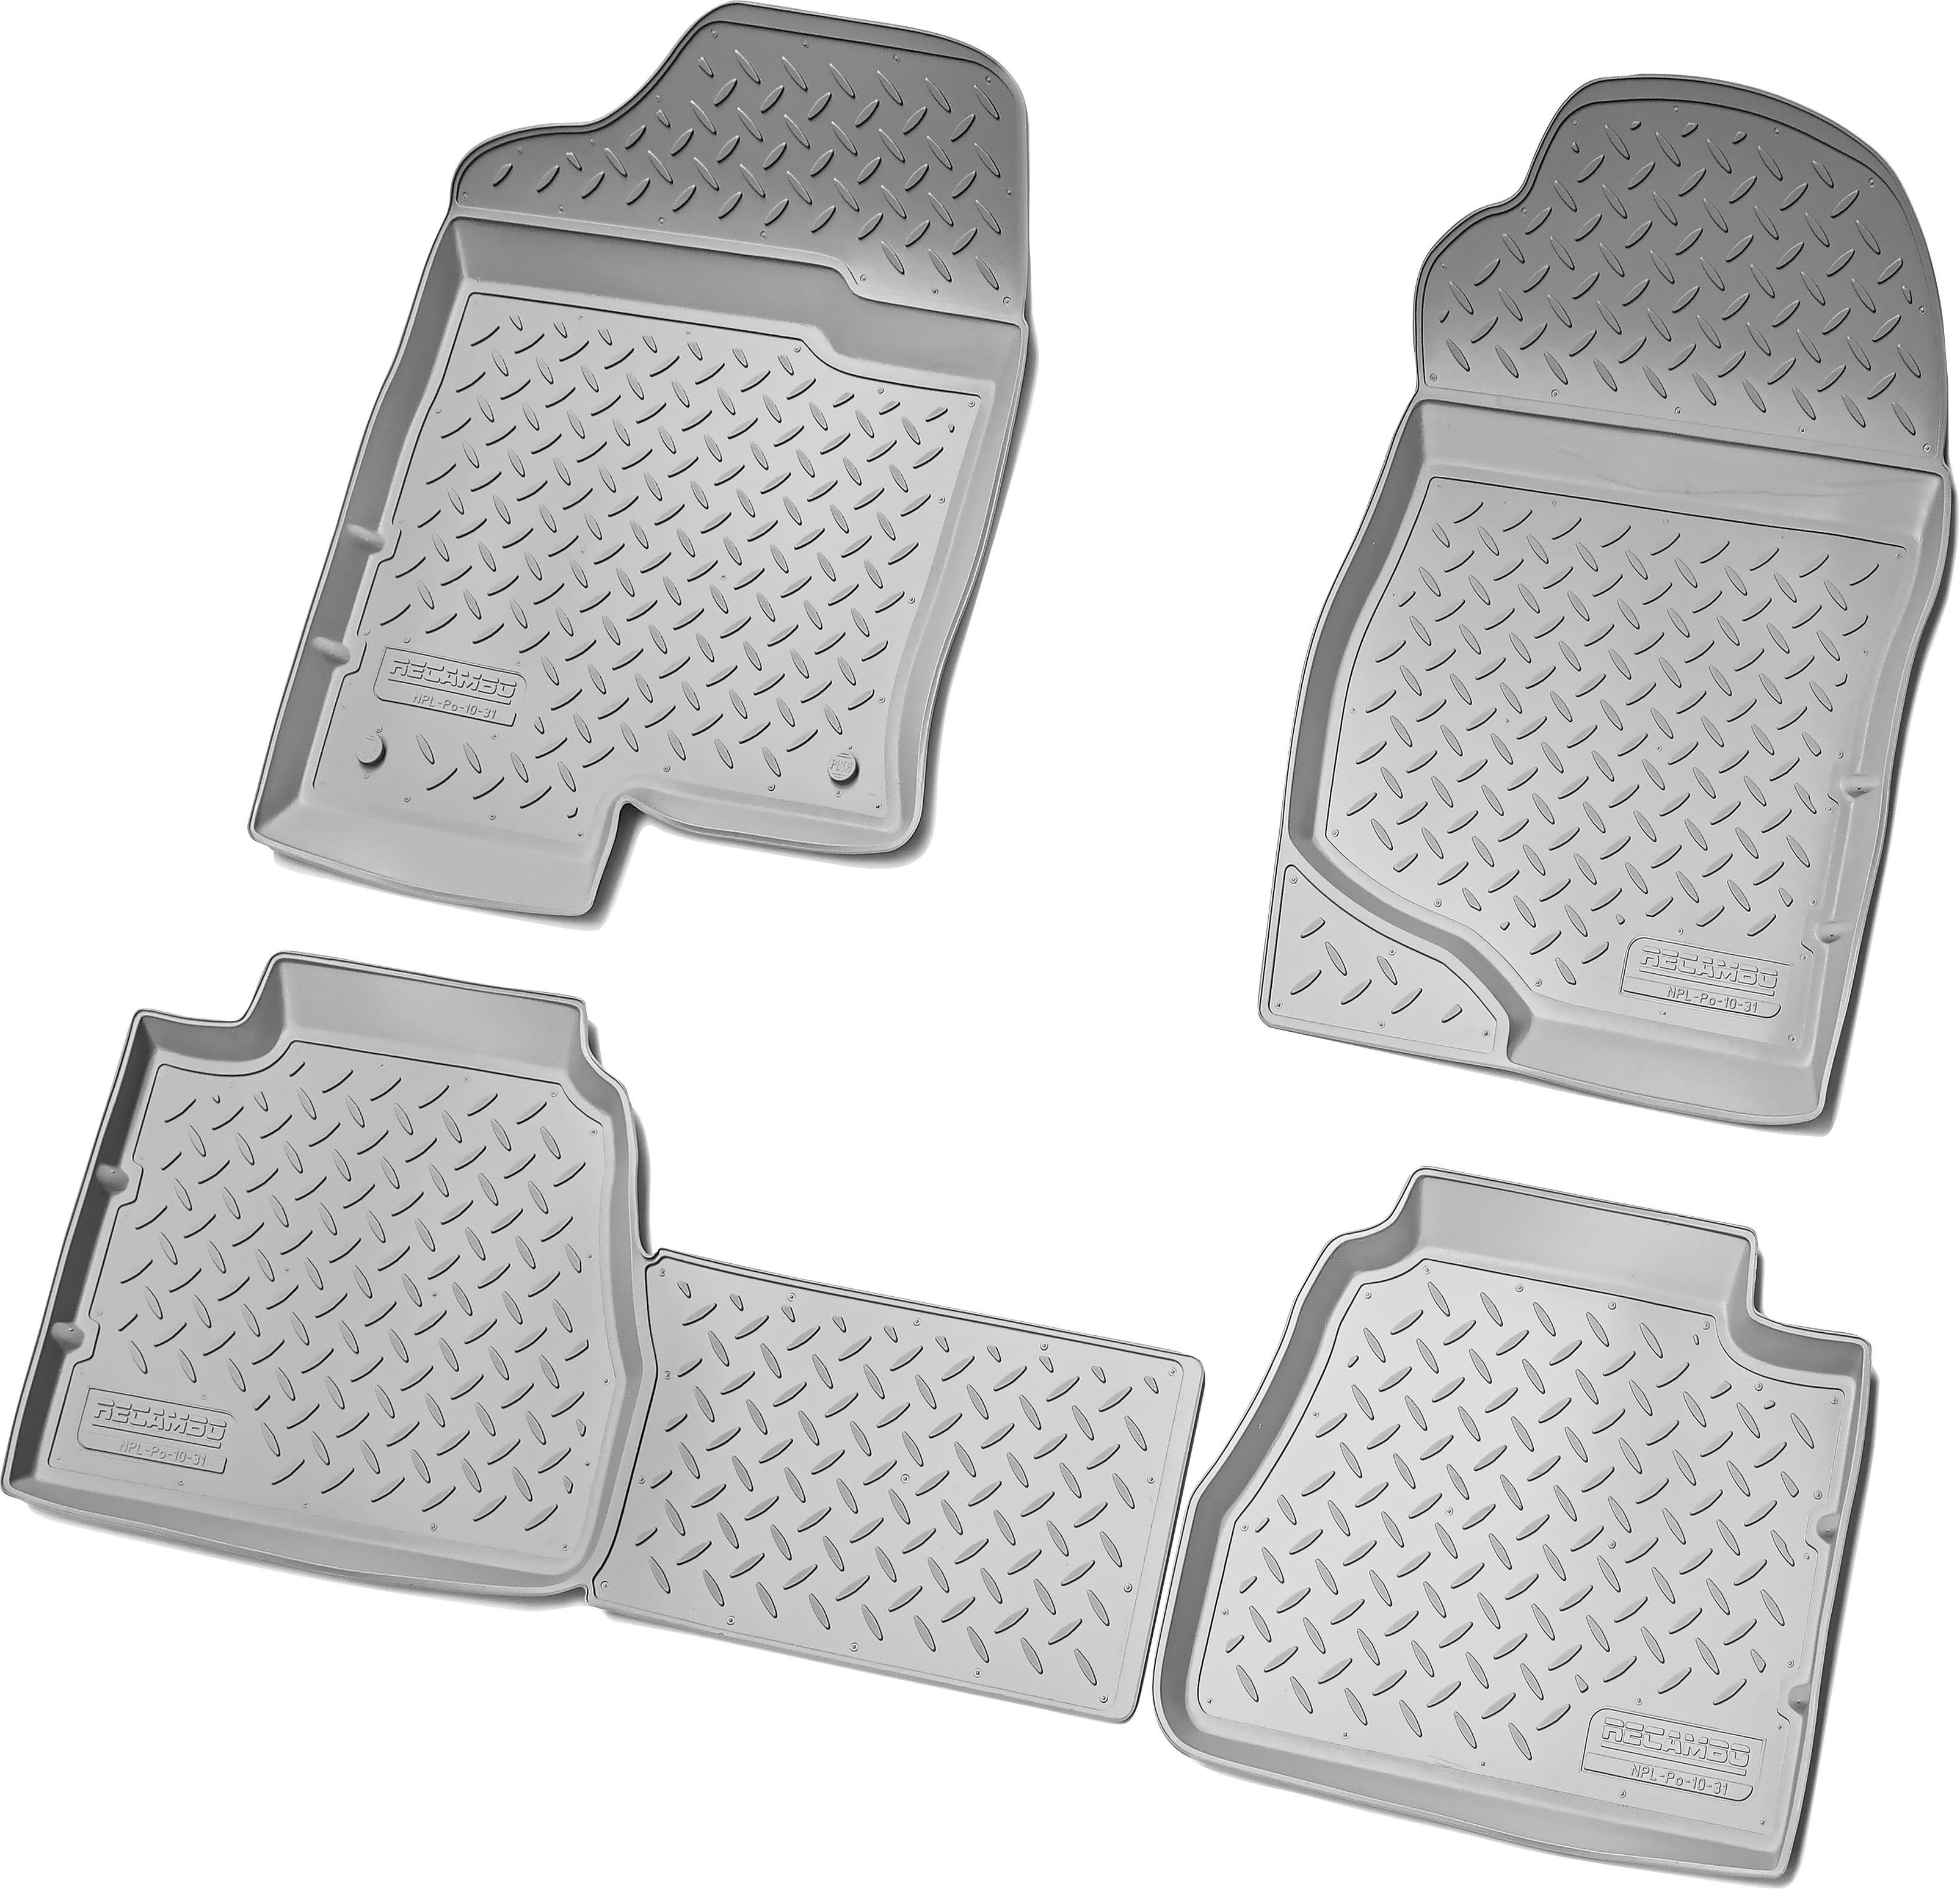 Top-Tipp RECAMBO Passform-Fußmatten CustomComforts (4 CADILLAC Passform St), 2014, 2007 Escalade, für perfekte 